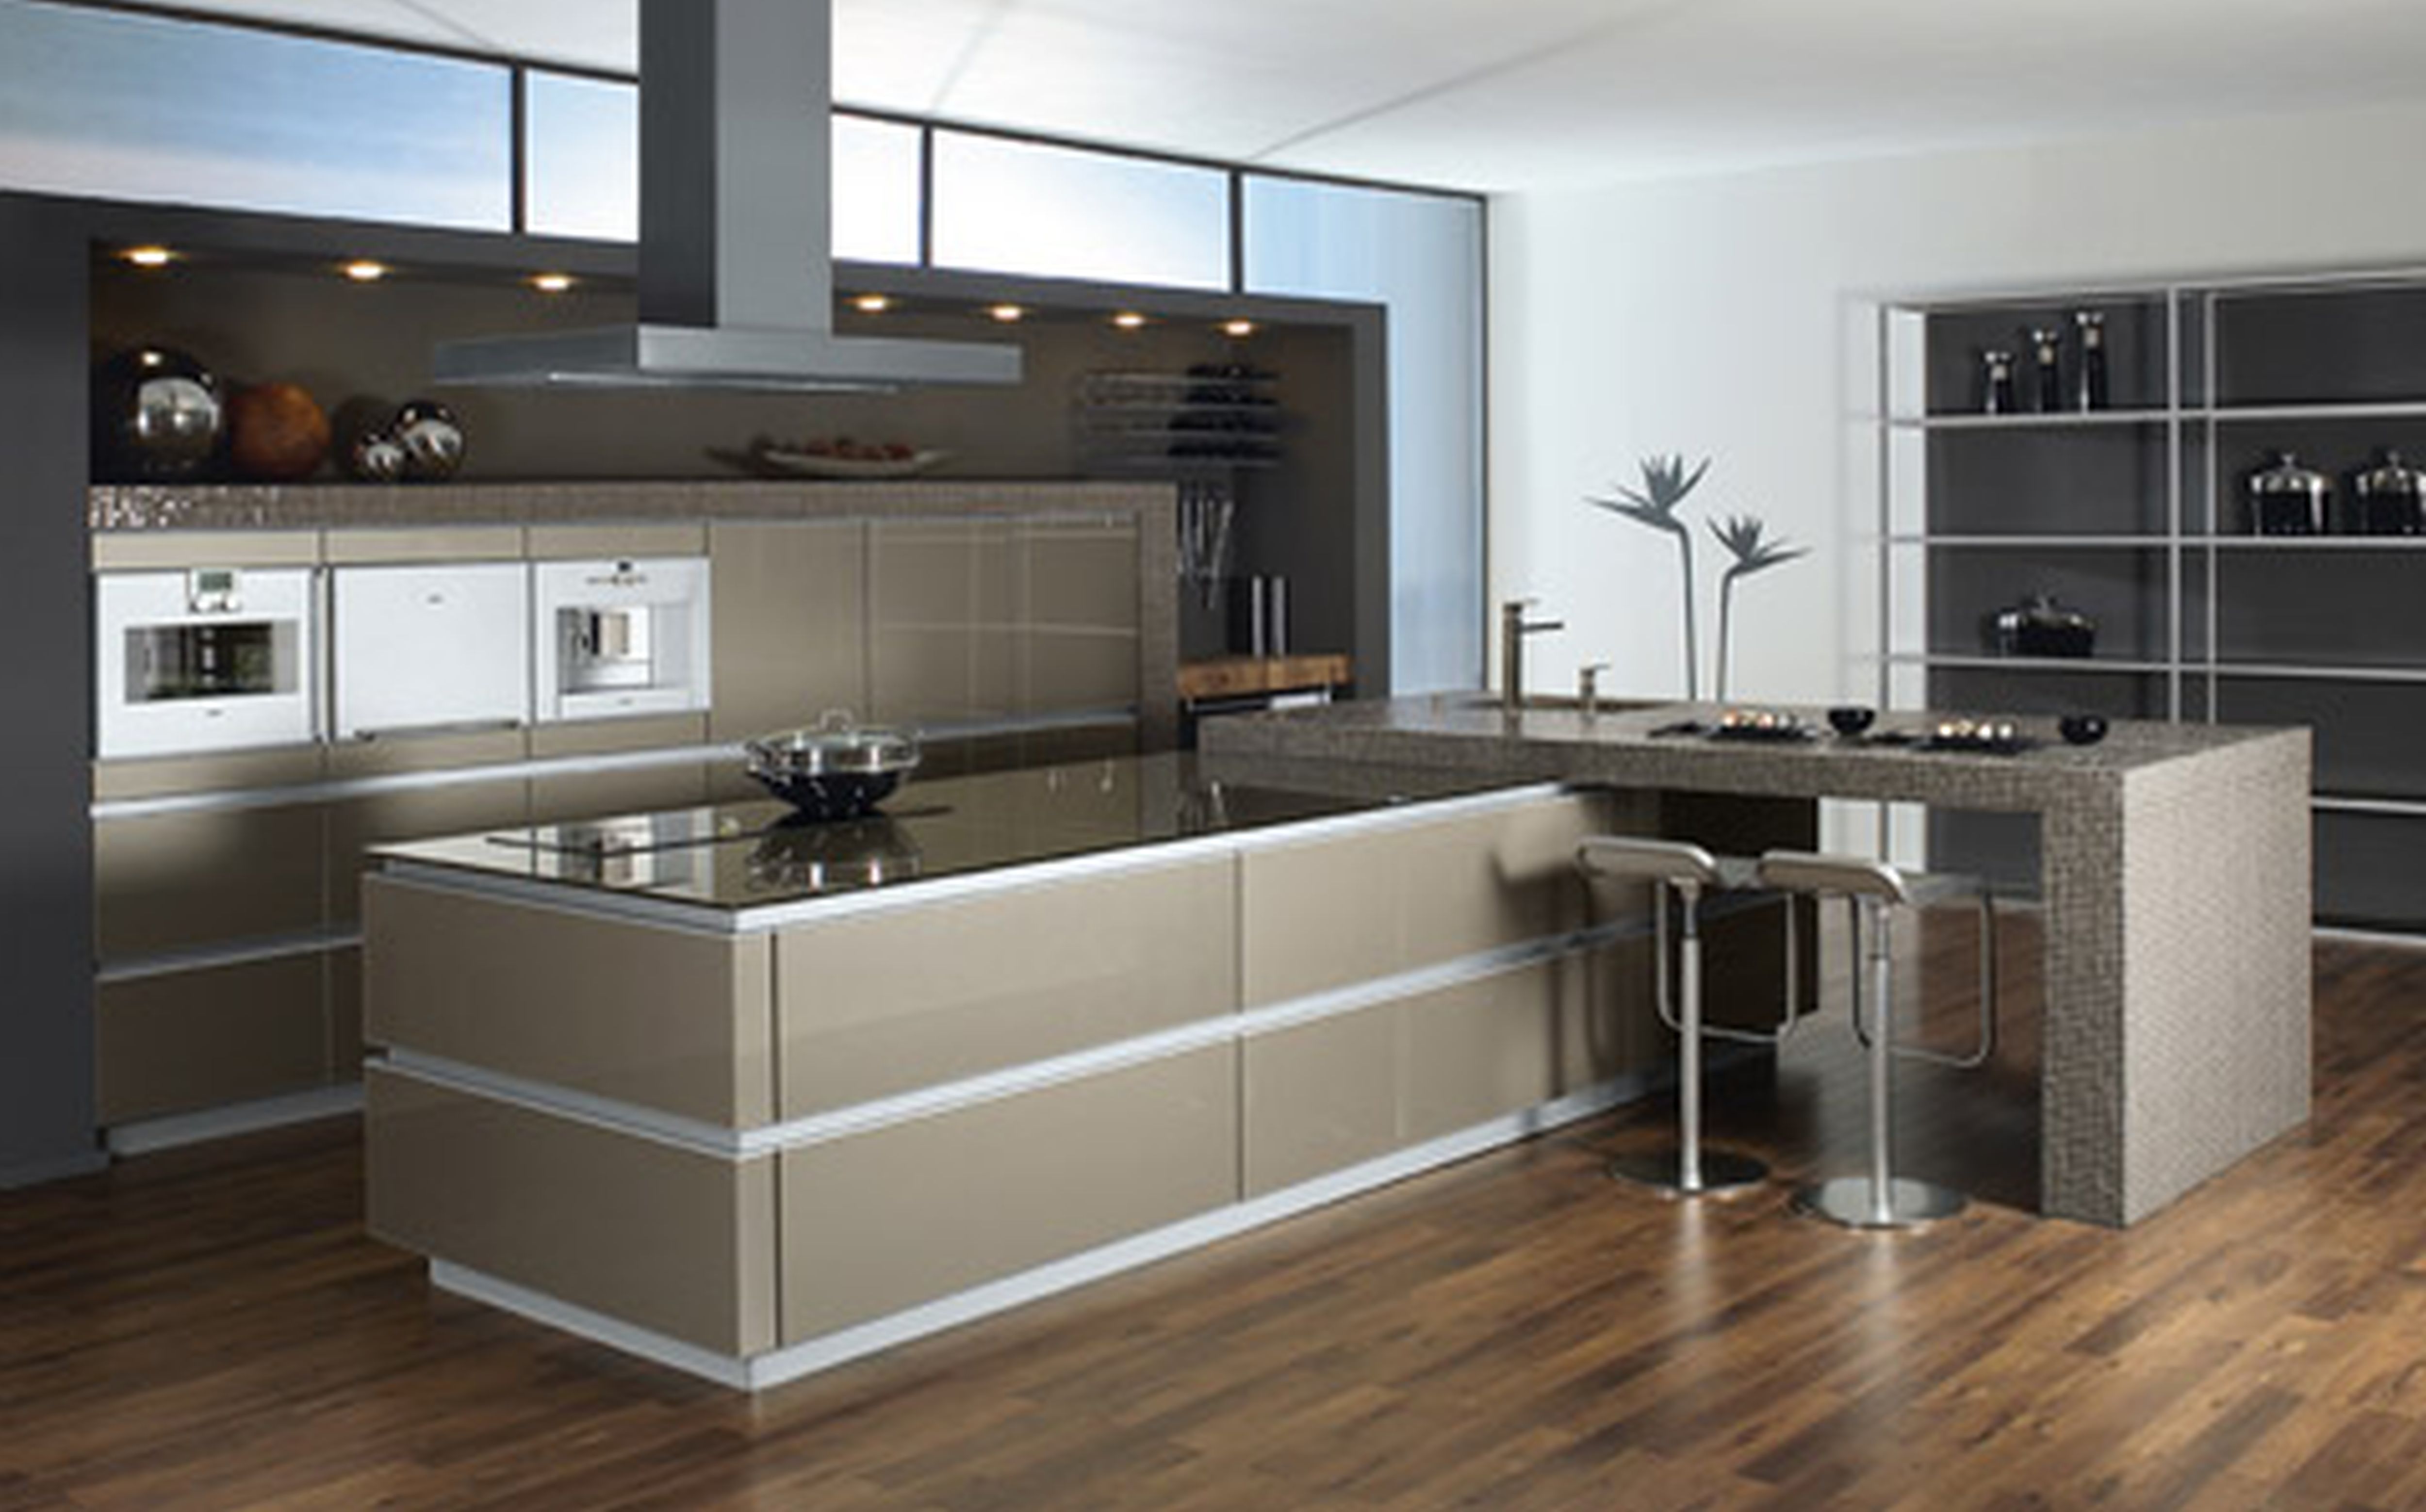 kitchen modern cabinets designs kitchens cabinet interior luxury aluminium contemporary furniture island decor islands layout house designing inspiring dimensions diner